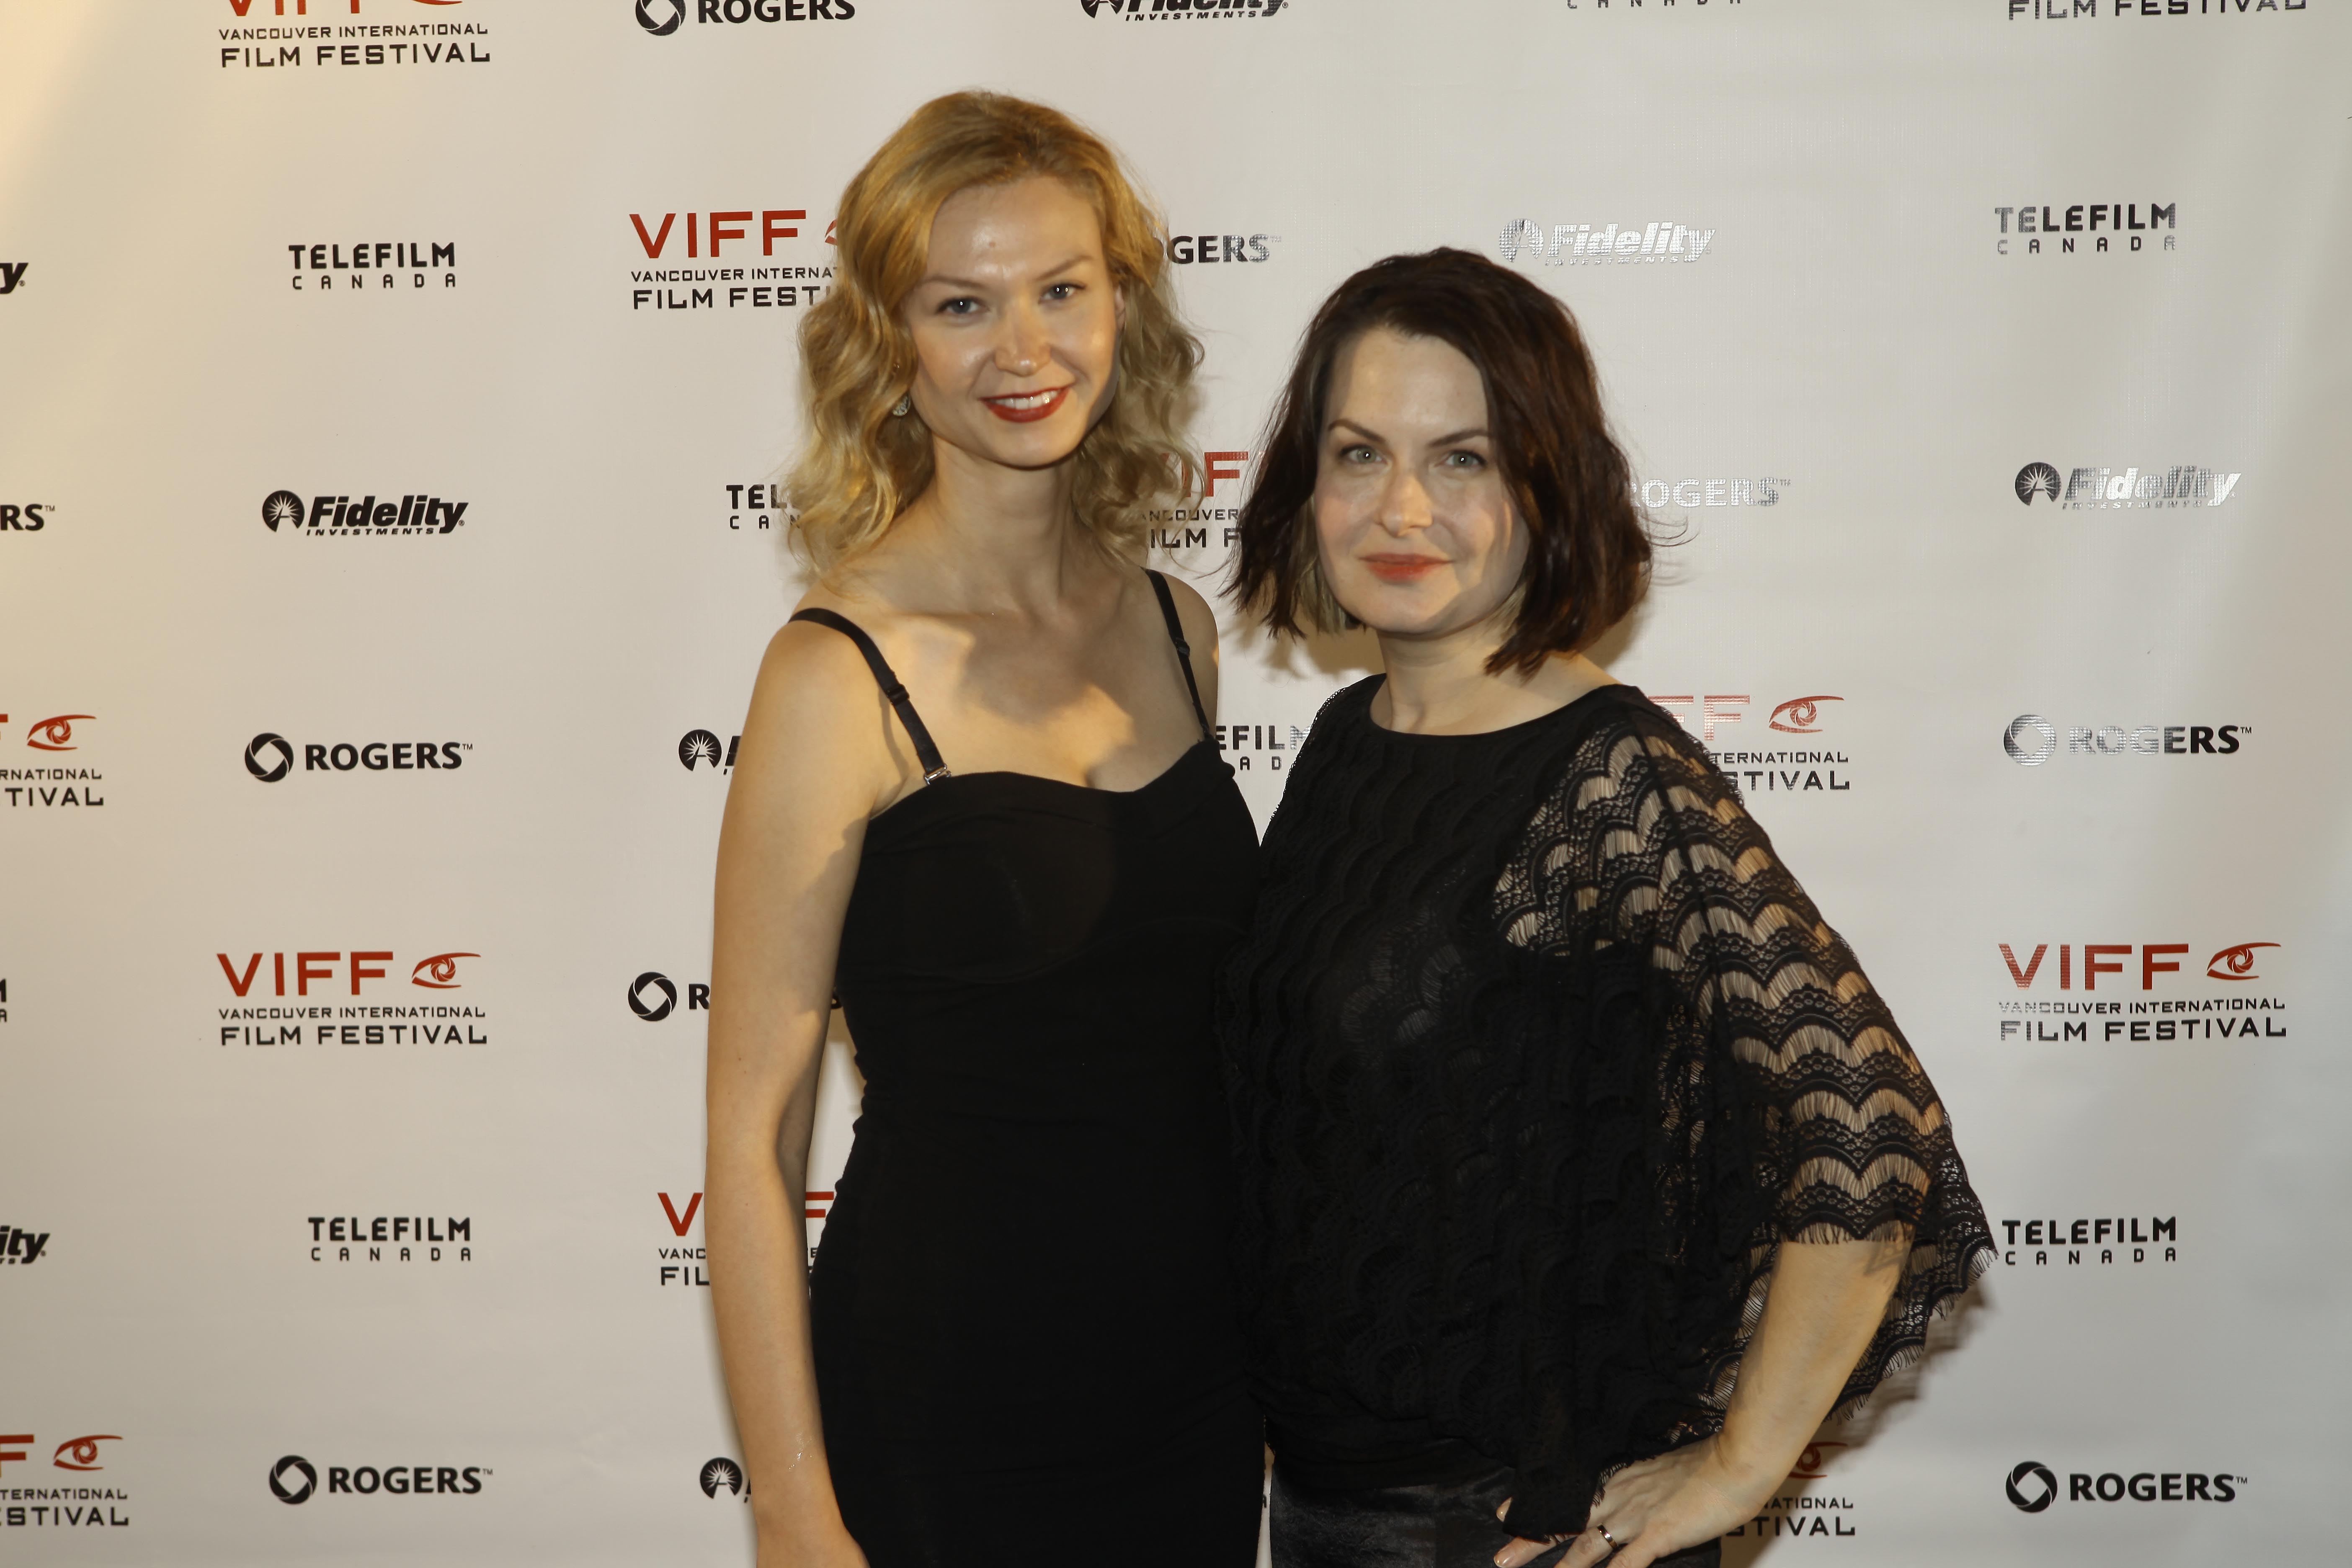 Director Danishka Esterhazy (right) with producer Ashley Hirt (left). Opening Gala of Vancouver International Film Festival 2013.